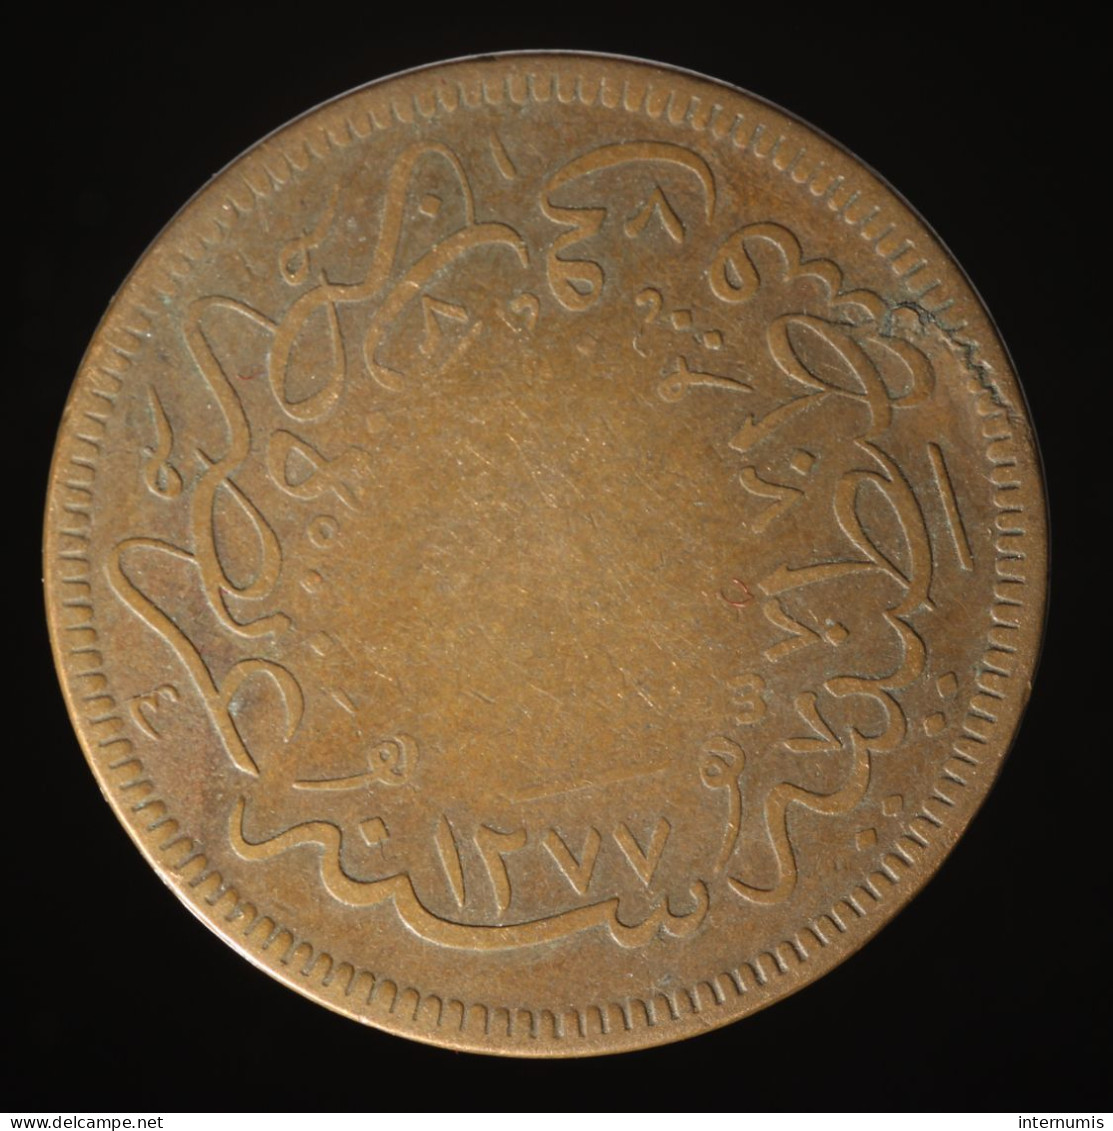  Turquie / Turkey, Abdulaziz, 40 Para, AH 1277//4 (1864), , Cuivre (Copper), TB+ (VF),
KM#702 - Egypt